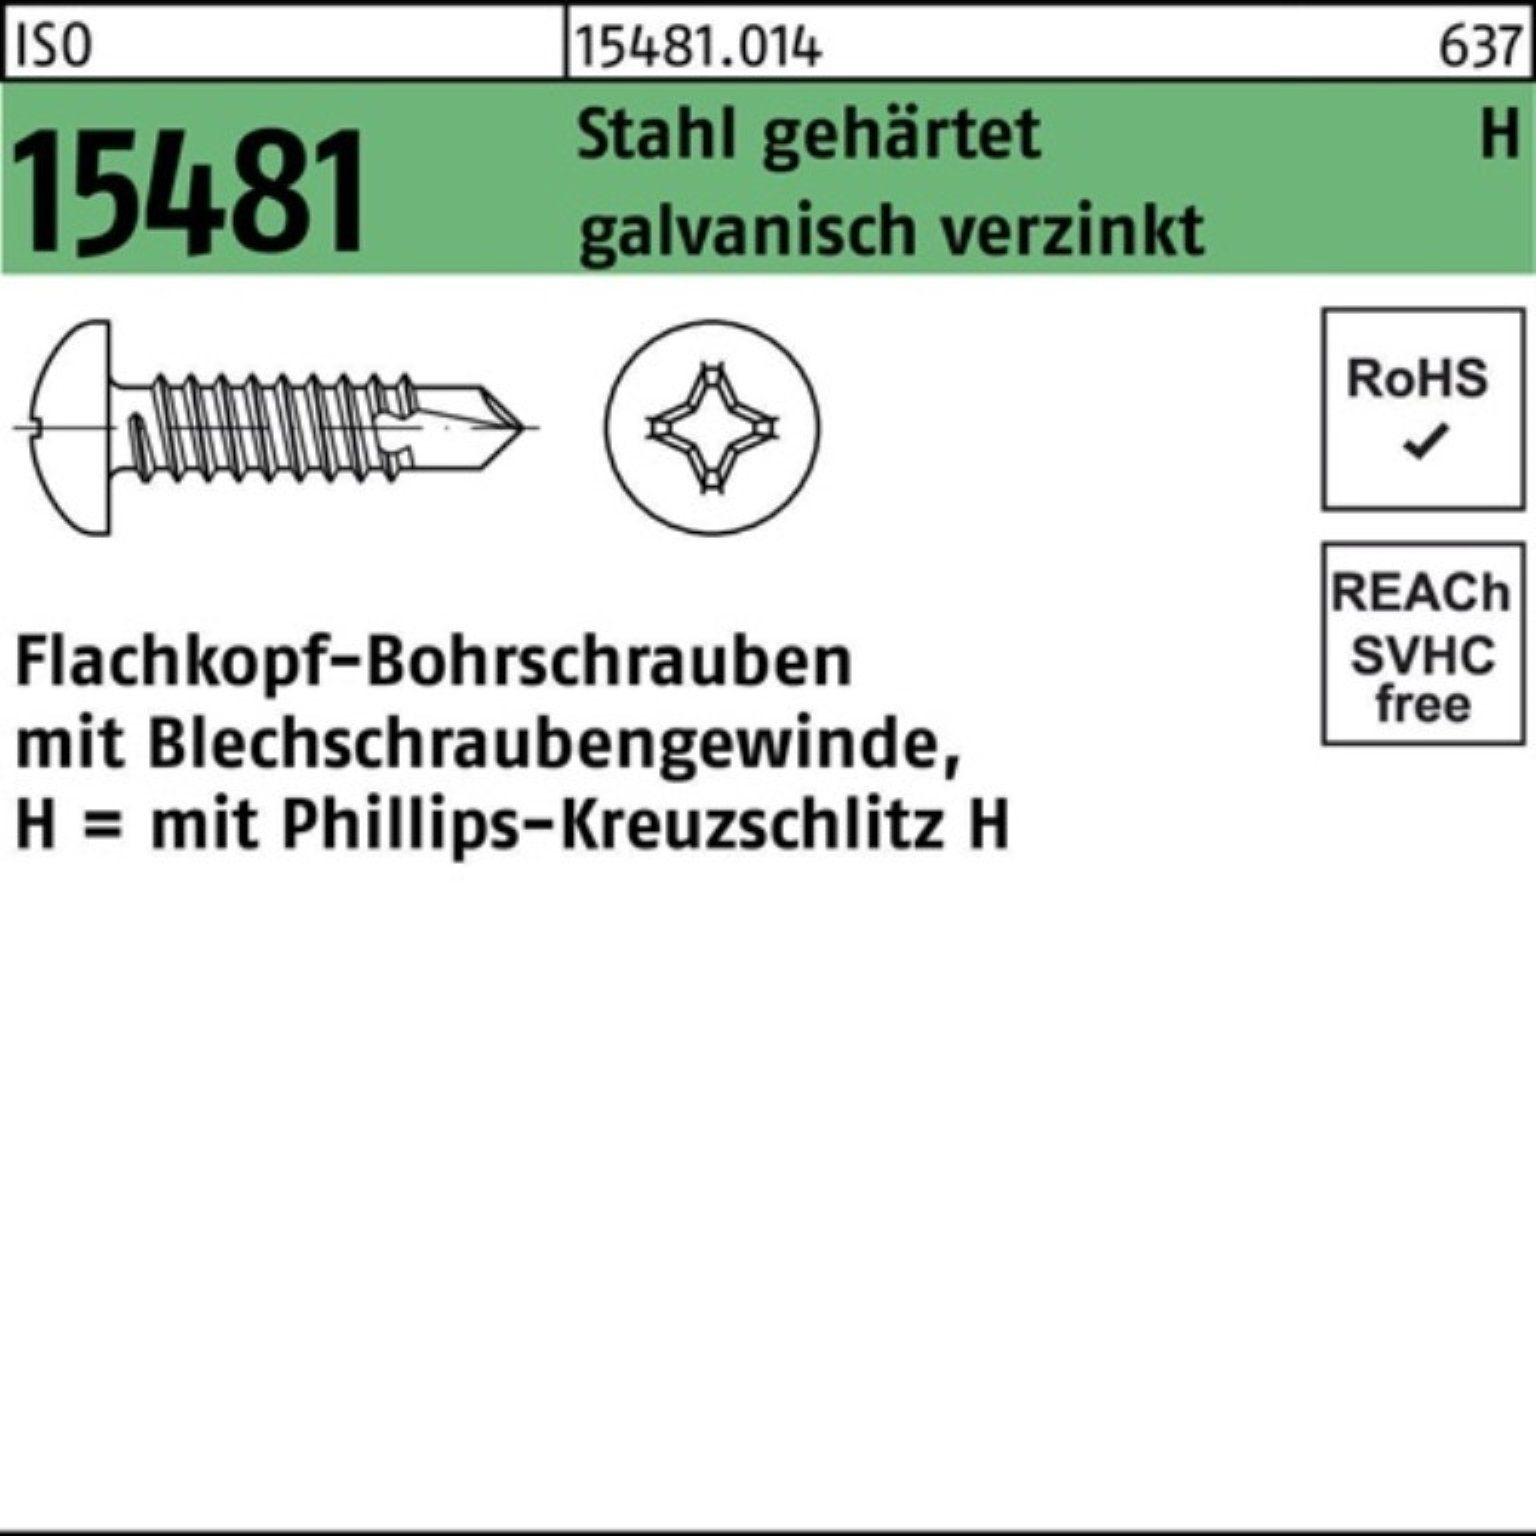 Reyher Bohrschraube 250er Pack FLAKObohrschraube ISO 15481 PH ST 4,8x90-H Stahl gehärtet